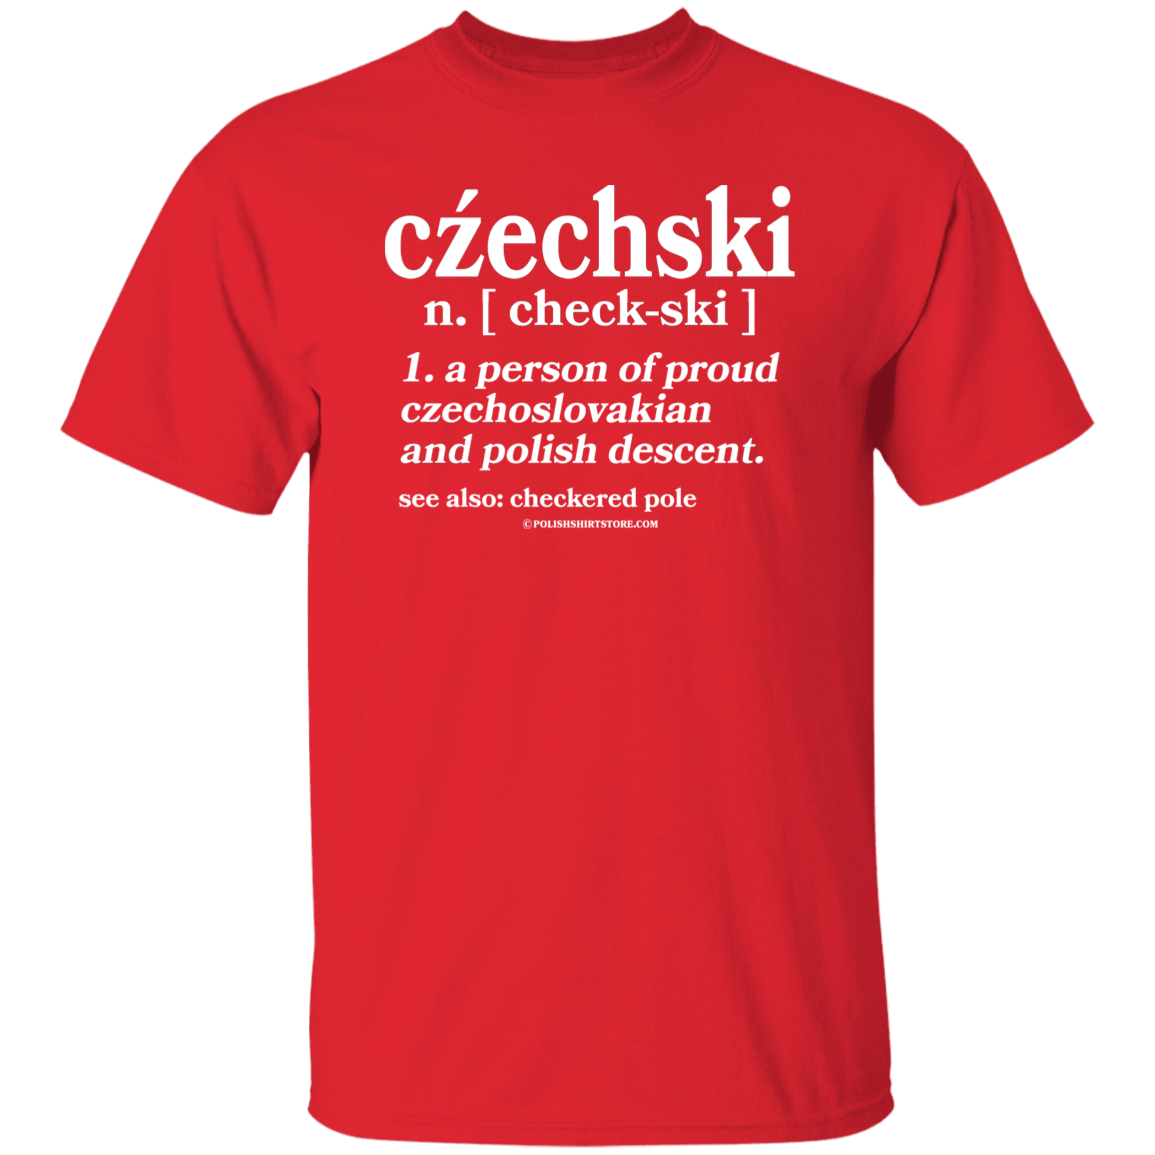 Checkski A Person Of Czechoslovakian Polish Descent Apparel CustomCat G500 5.3 oz. T-Shirt Red S